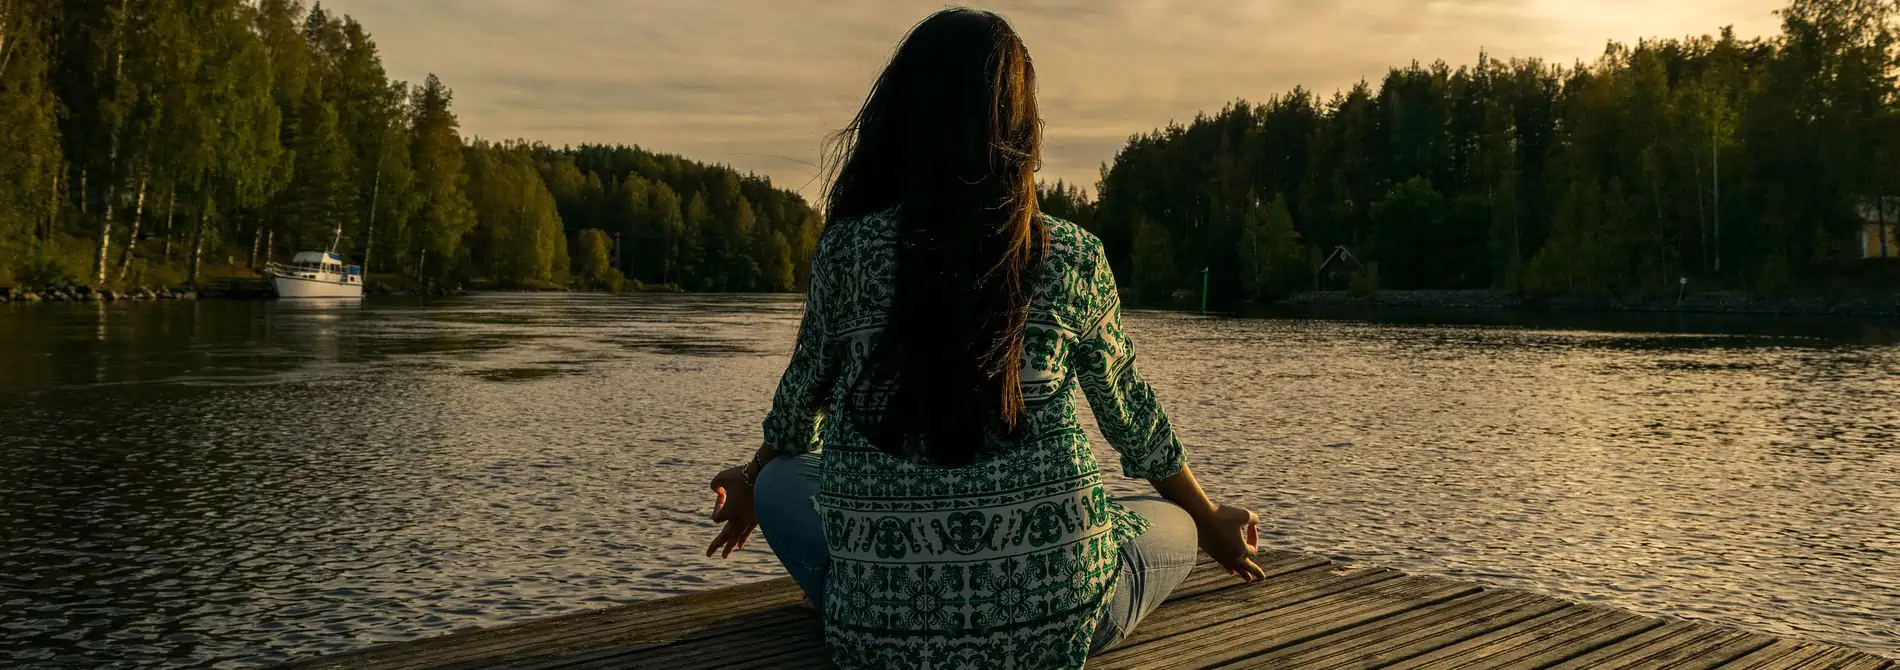 Woman sitting in yoga pose on dock